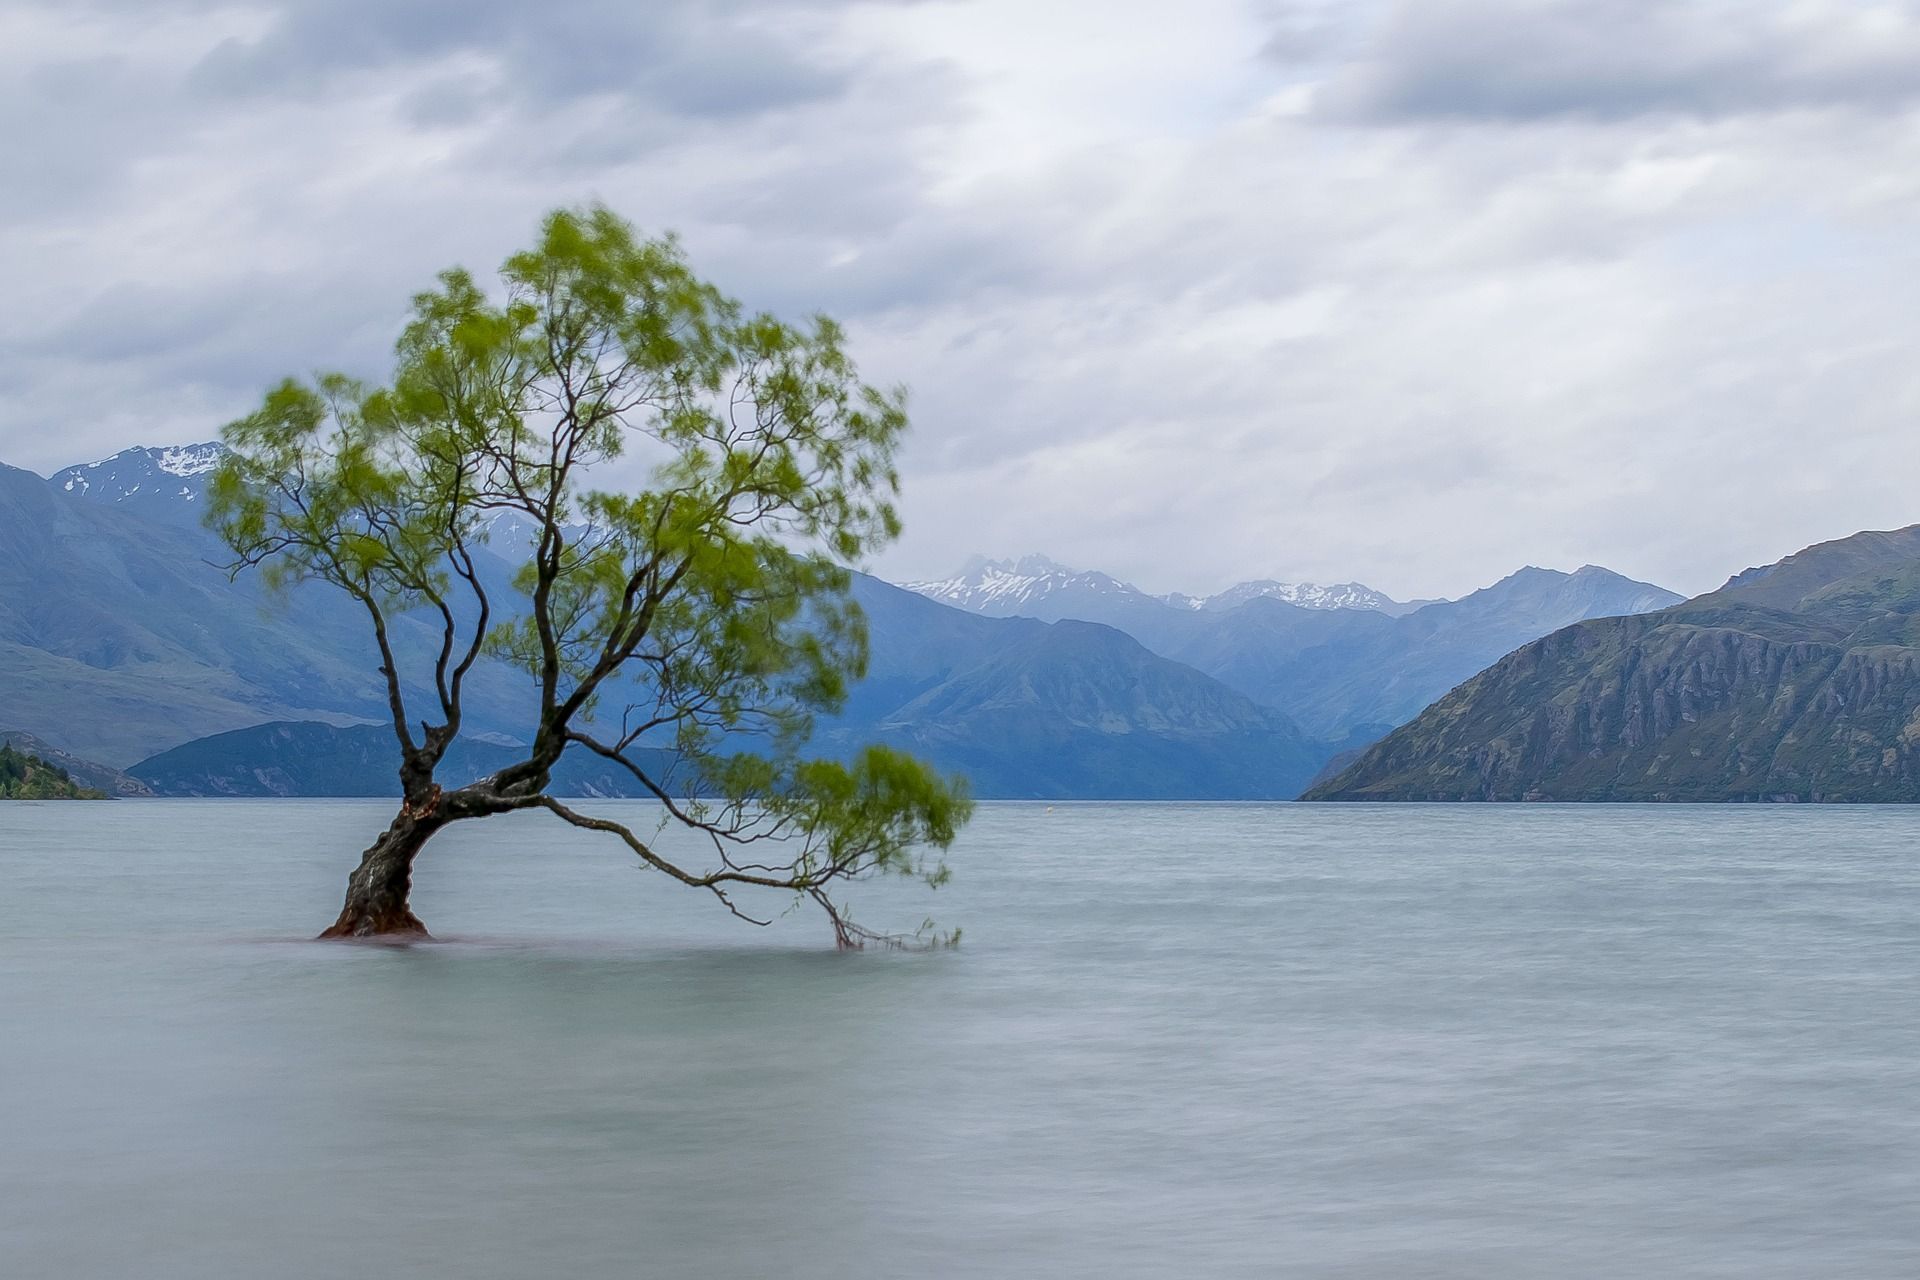 Lake Wanaka Tree with surrounding mountains, New Zealand